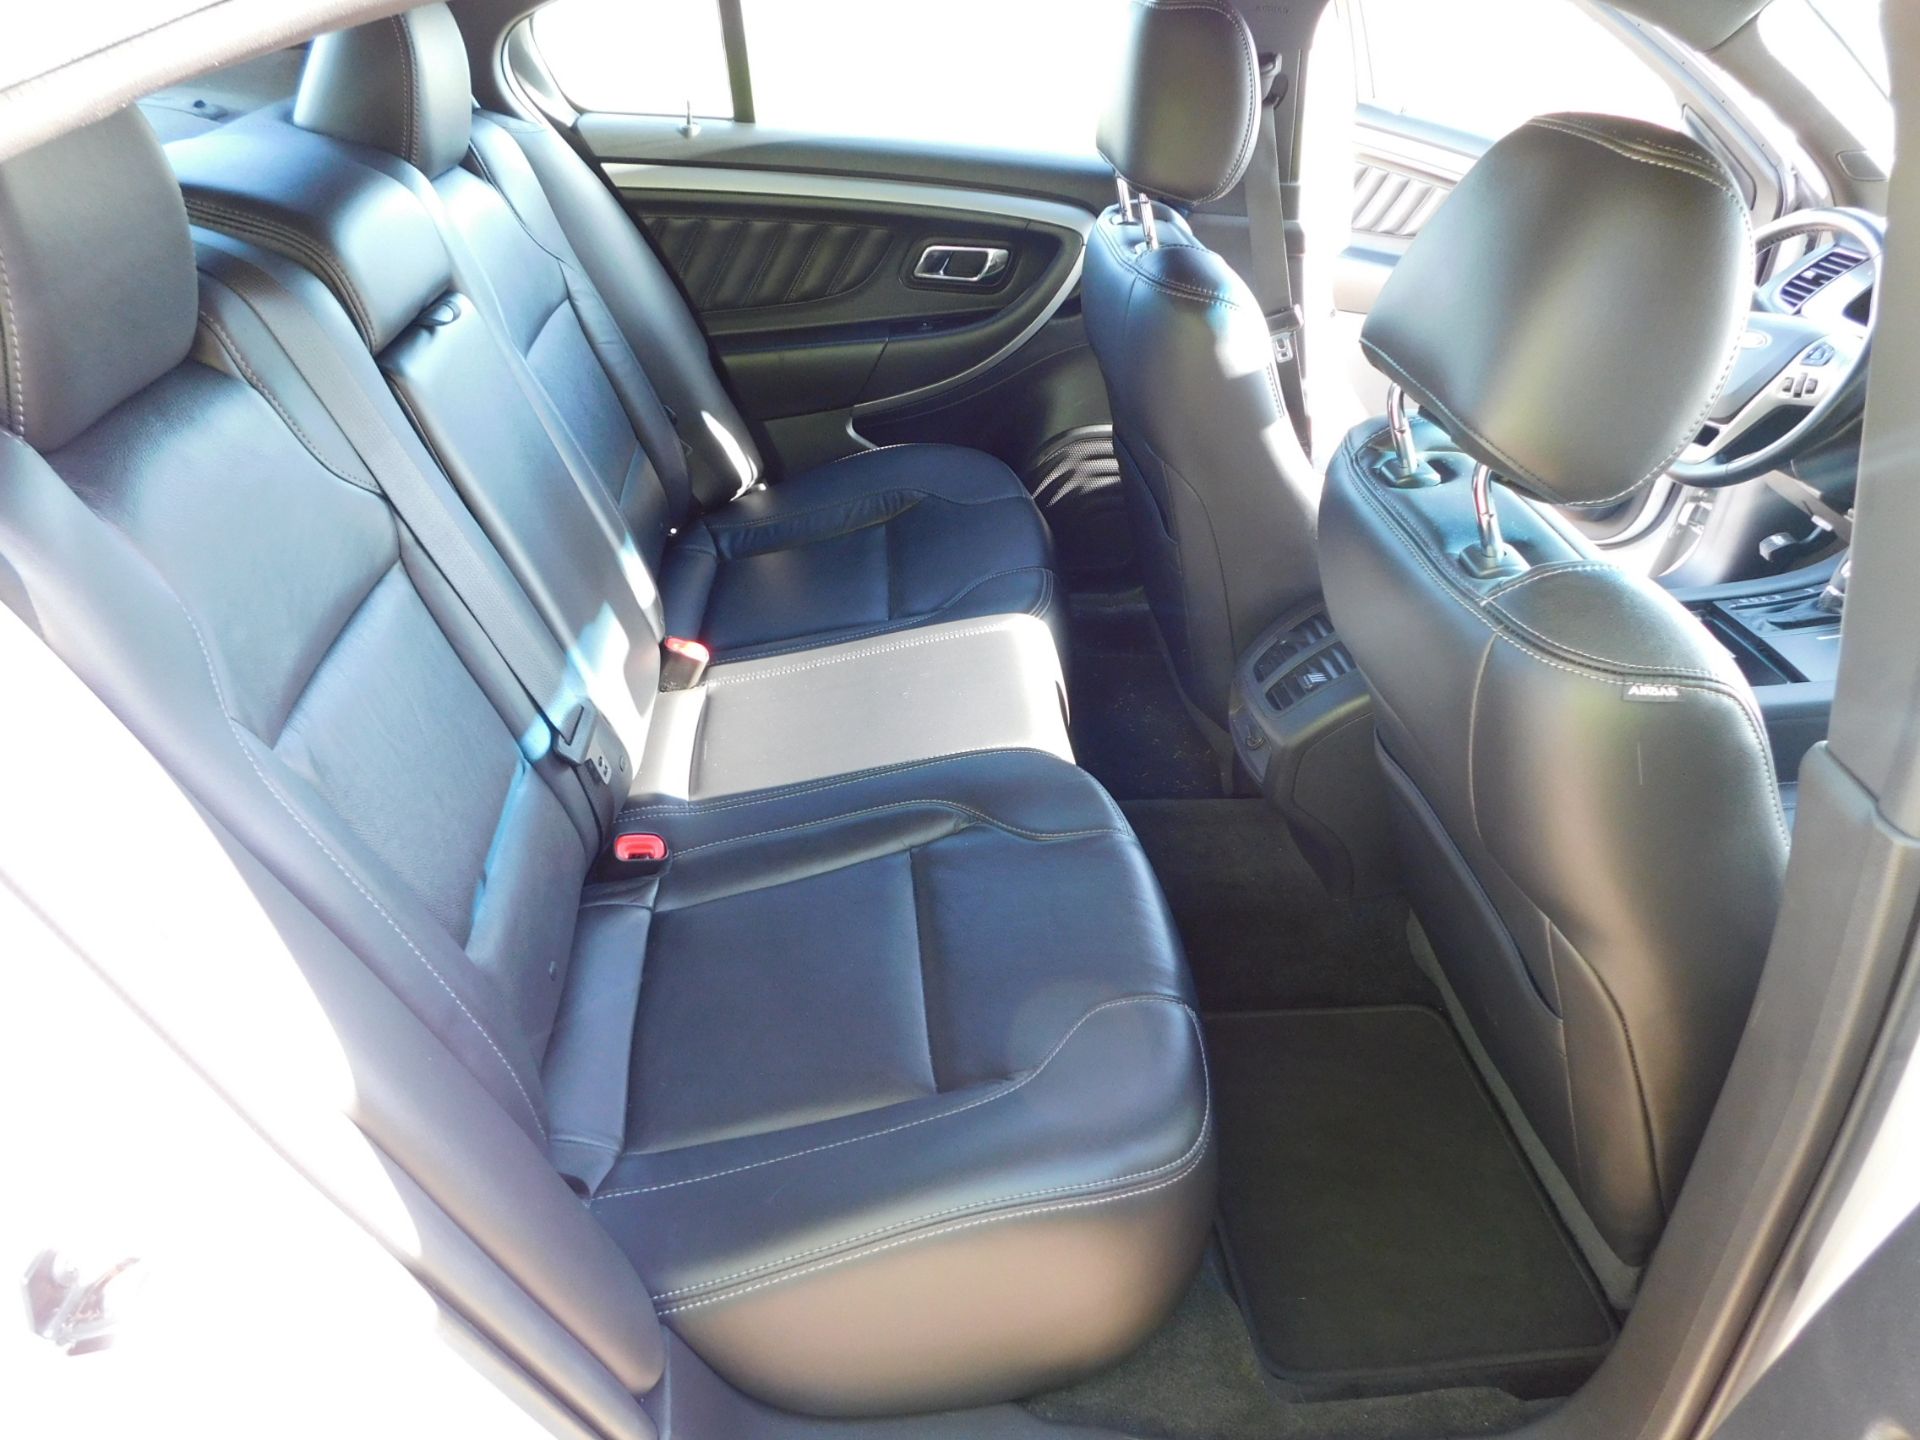 2015 Ford Taurus SEL 4-Door Sedan, vin 1FAHP2E80FG182717, Automatic Transmission, PW,PL,AC,Leather - Image 32 of 42